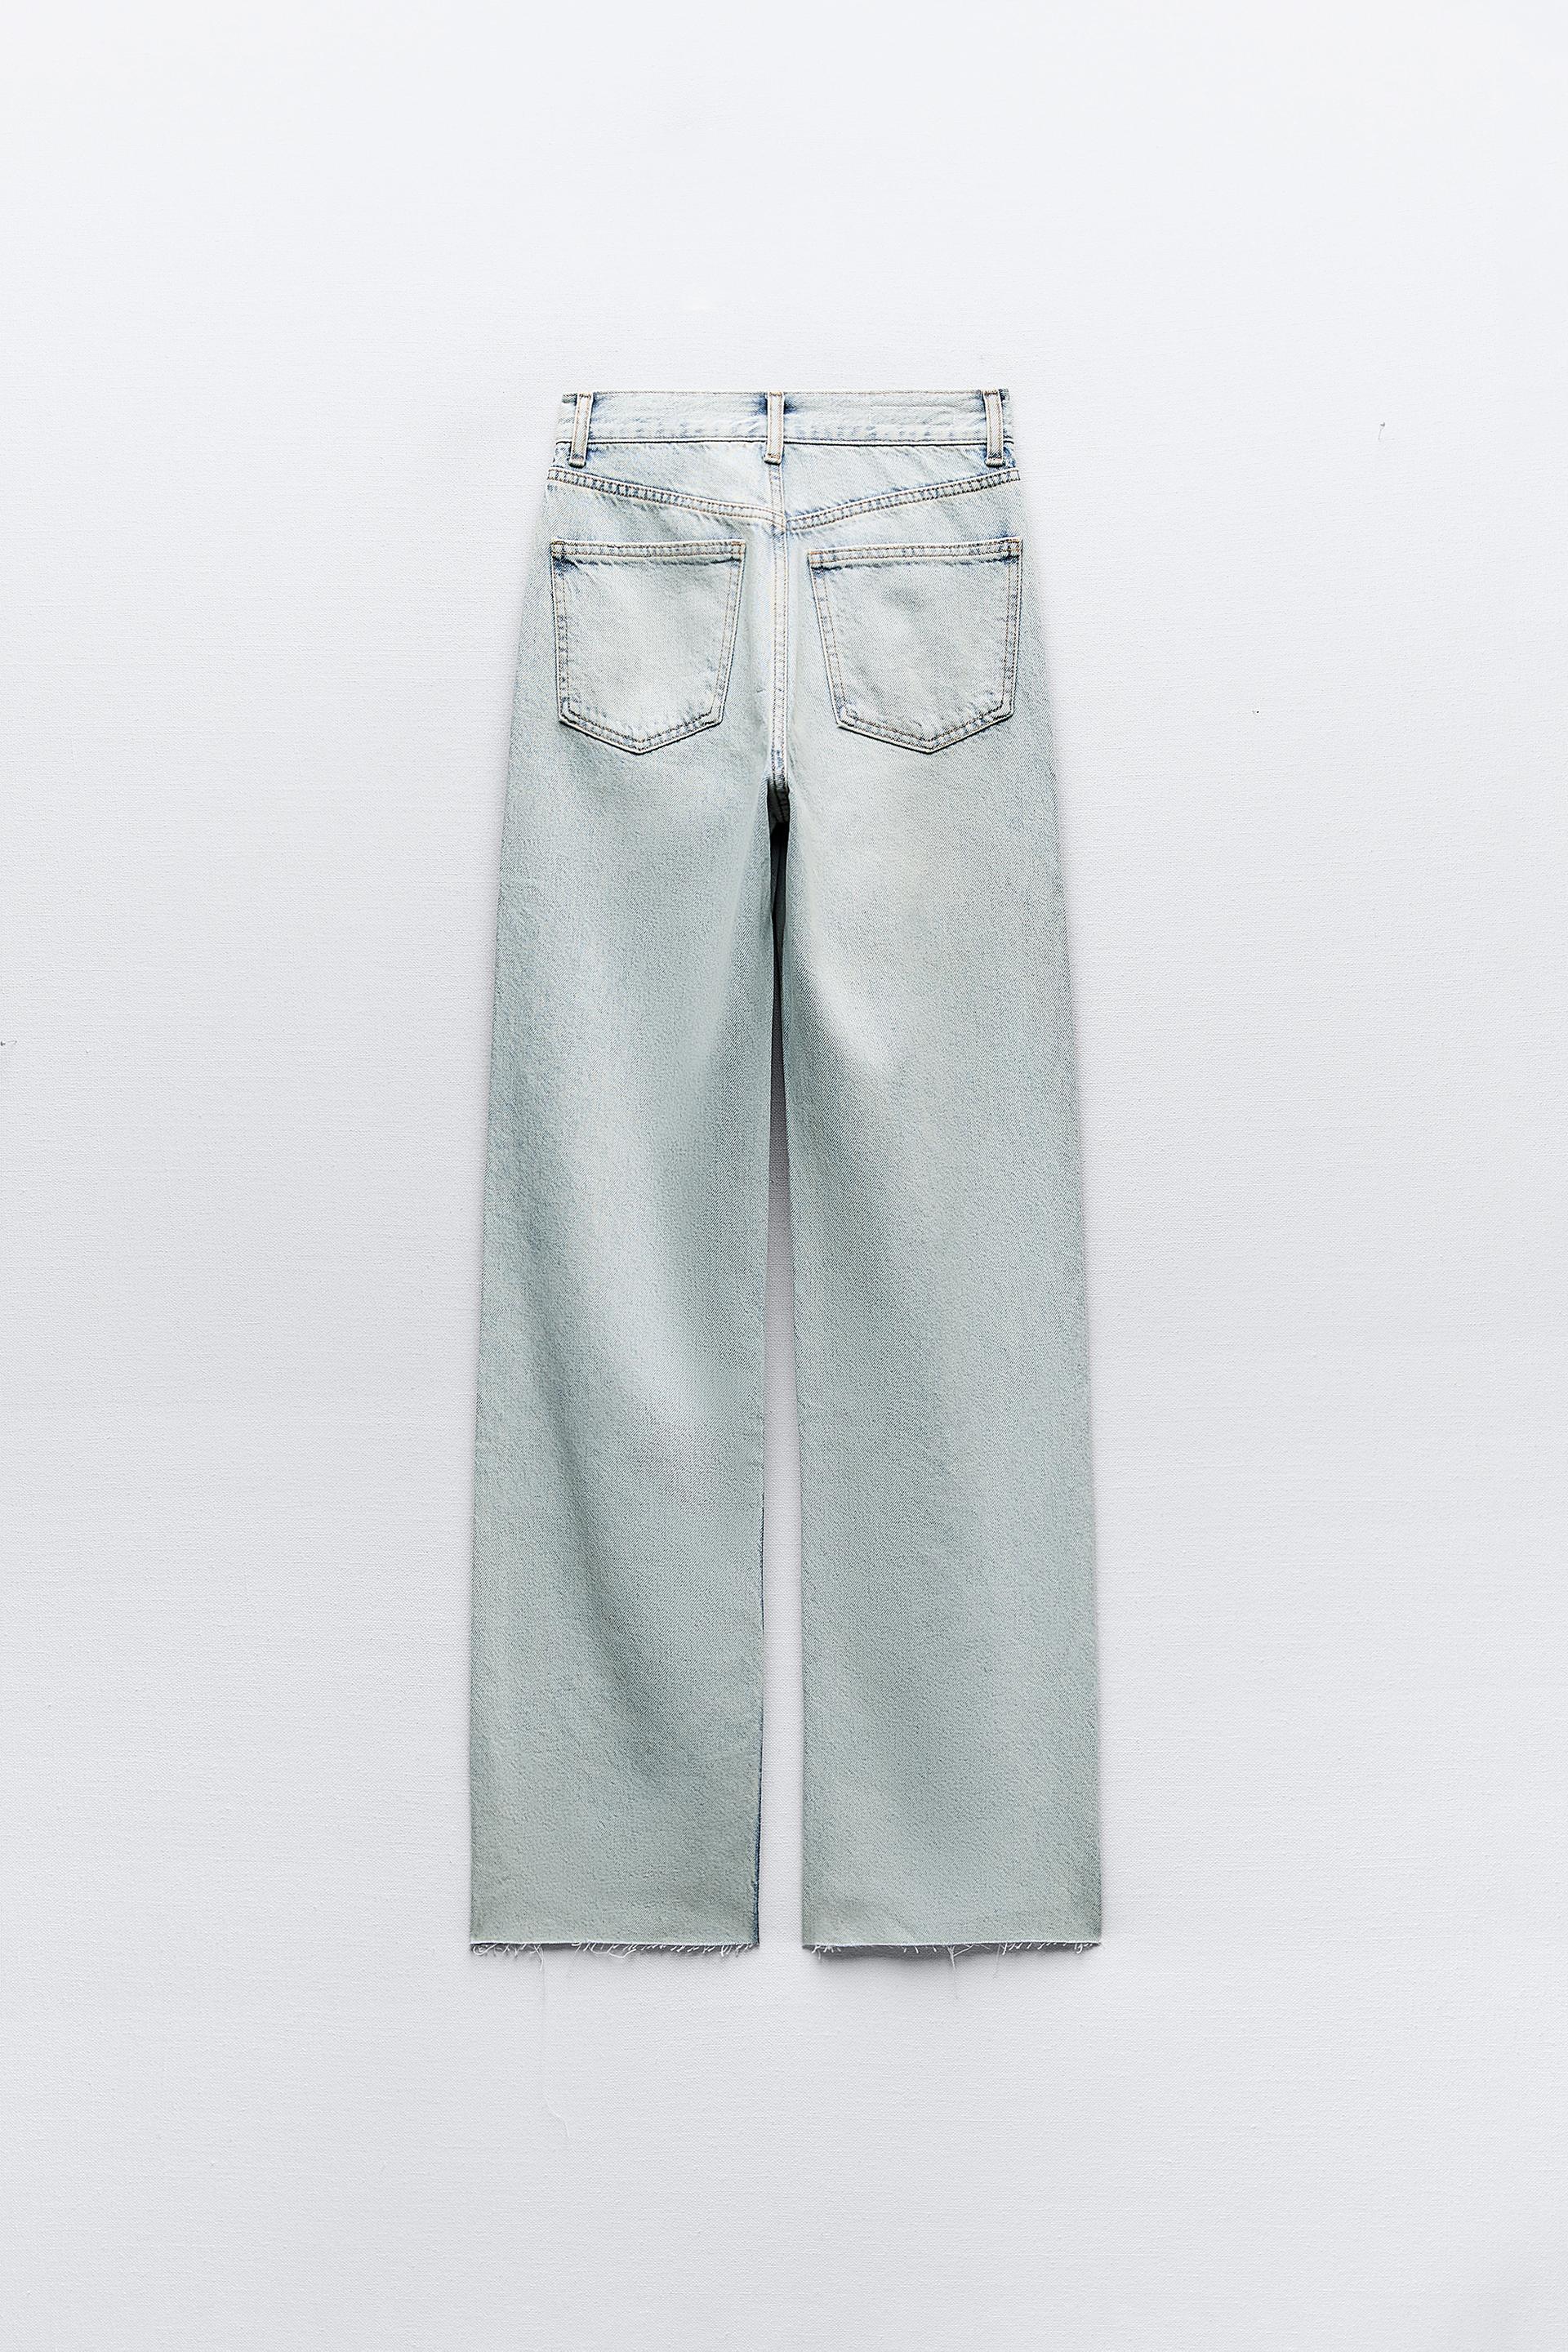 Zara, Jeans, Zara 9s Wide Leg White Snake Print Pants Jeans High Waist  Python Size 4